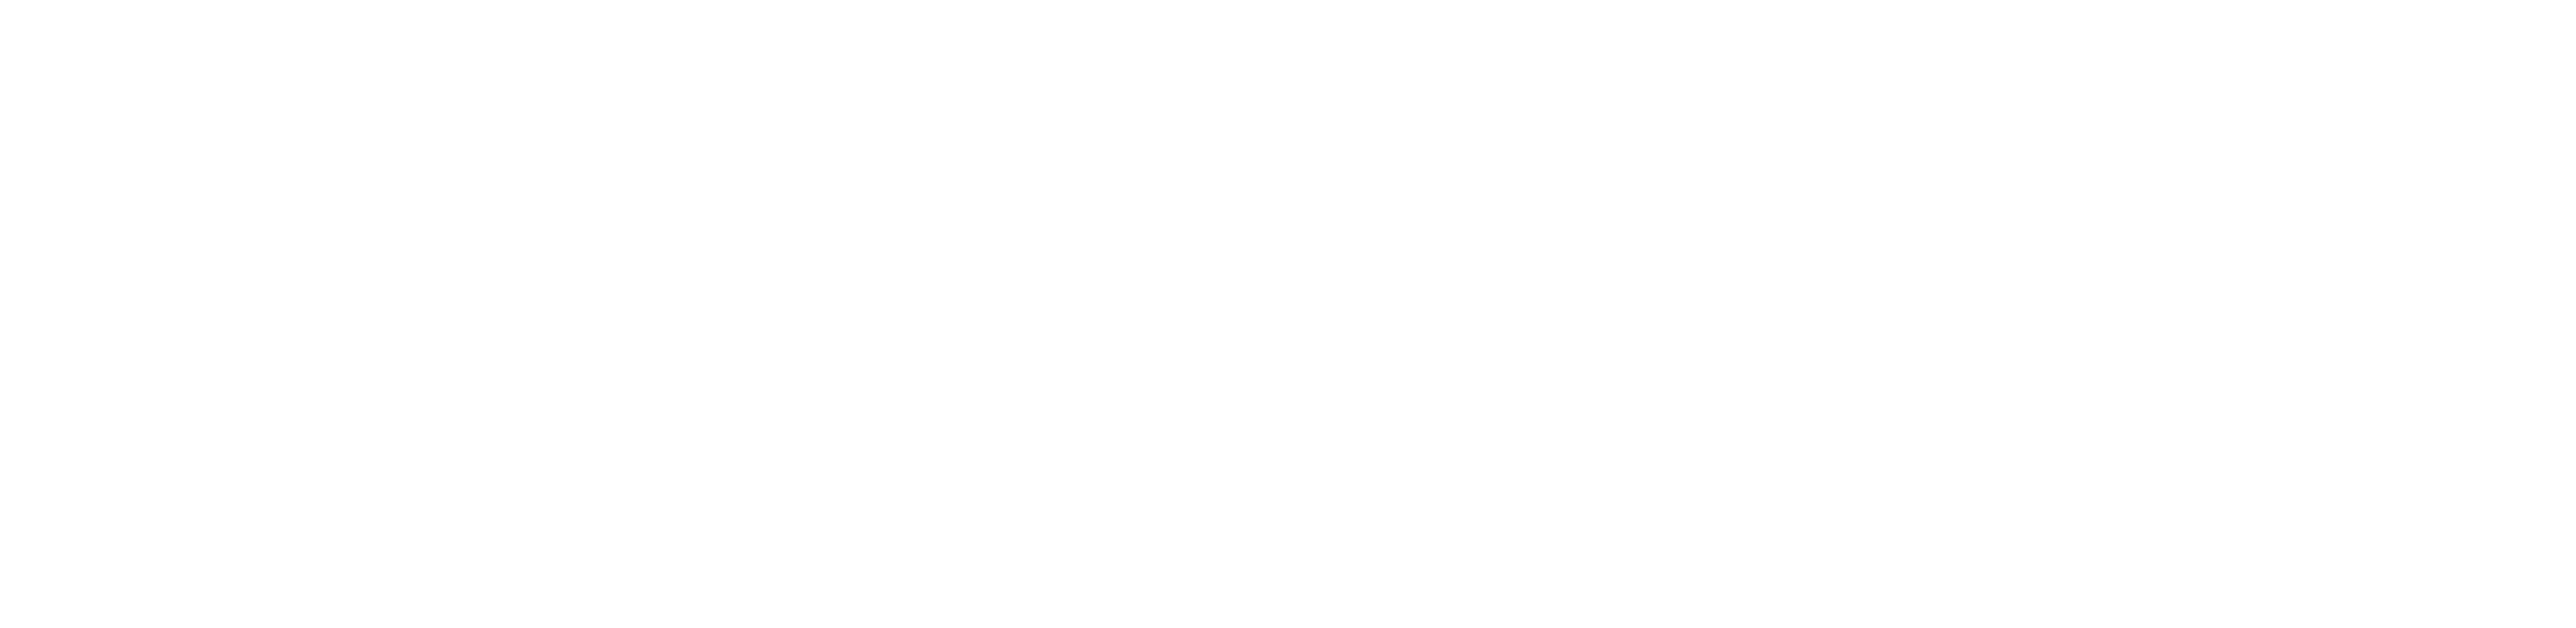 translink